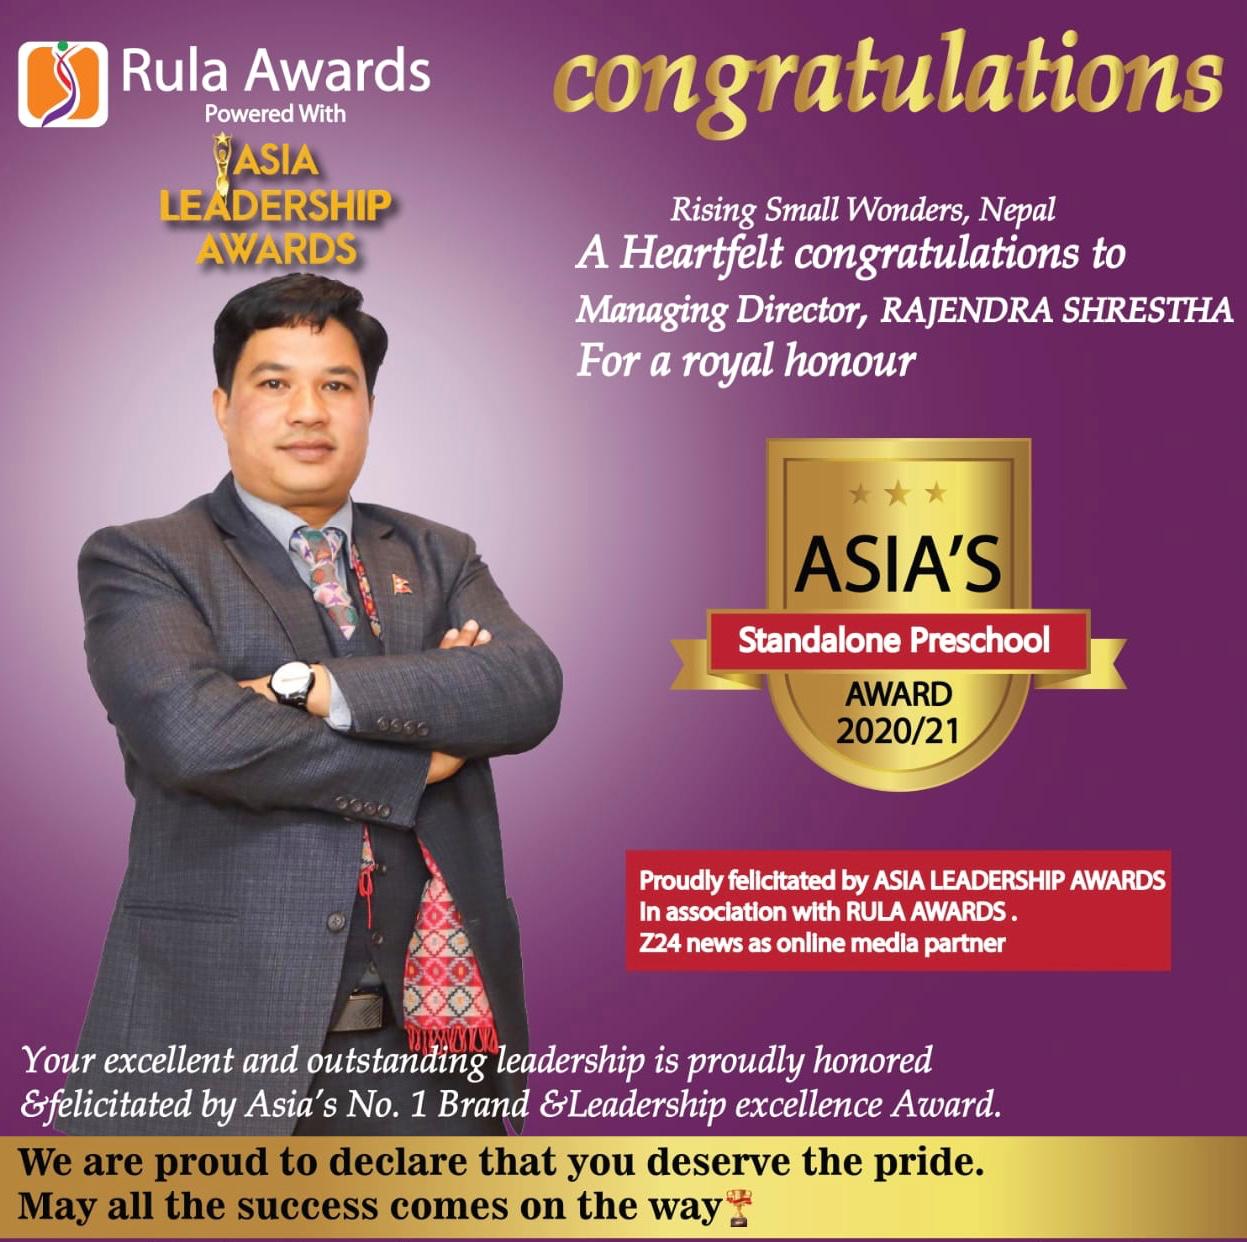 Rajendra Shrestha has bagged Asia's Stand alone Preschool Award